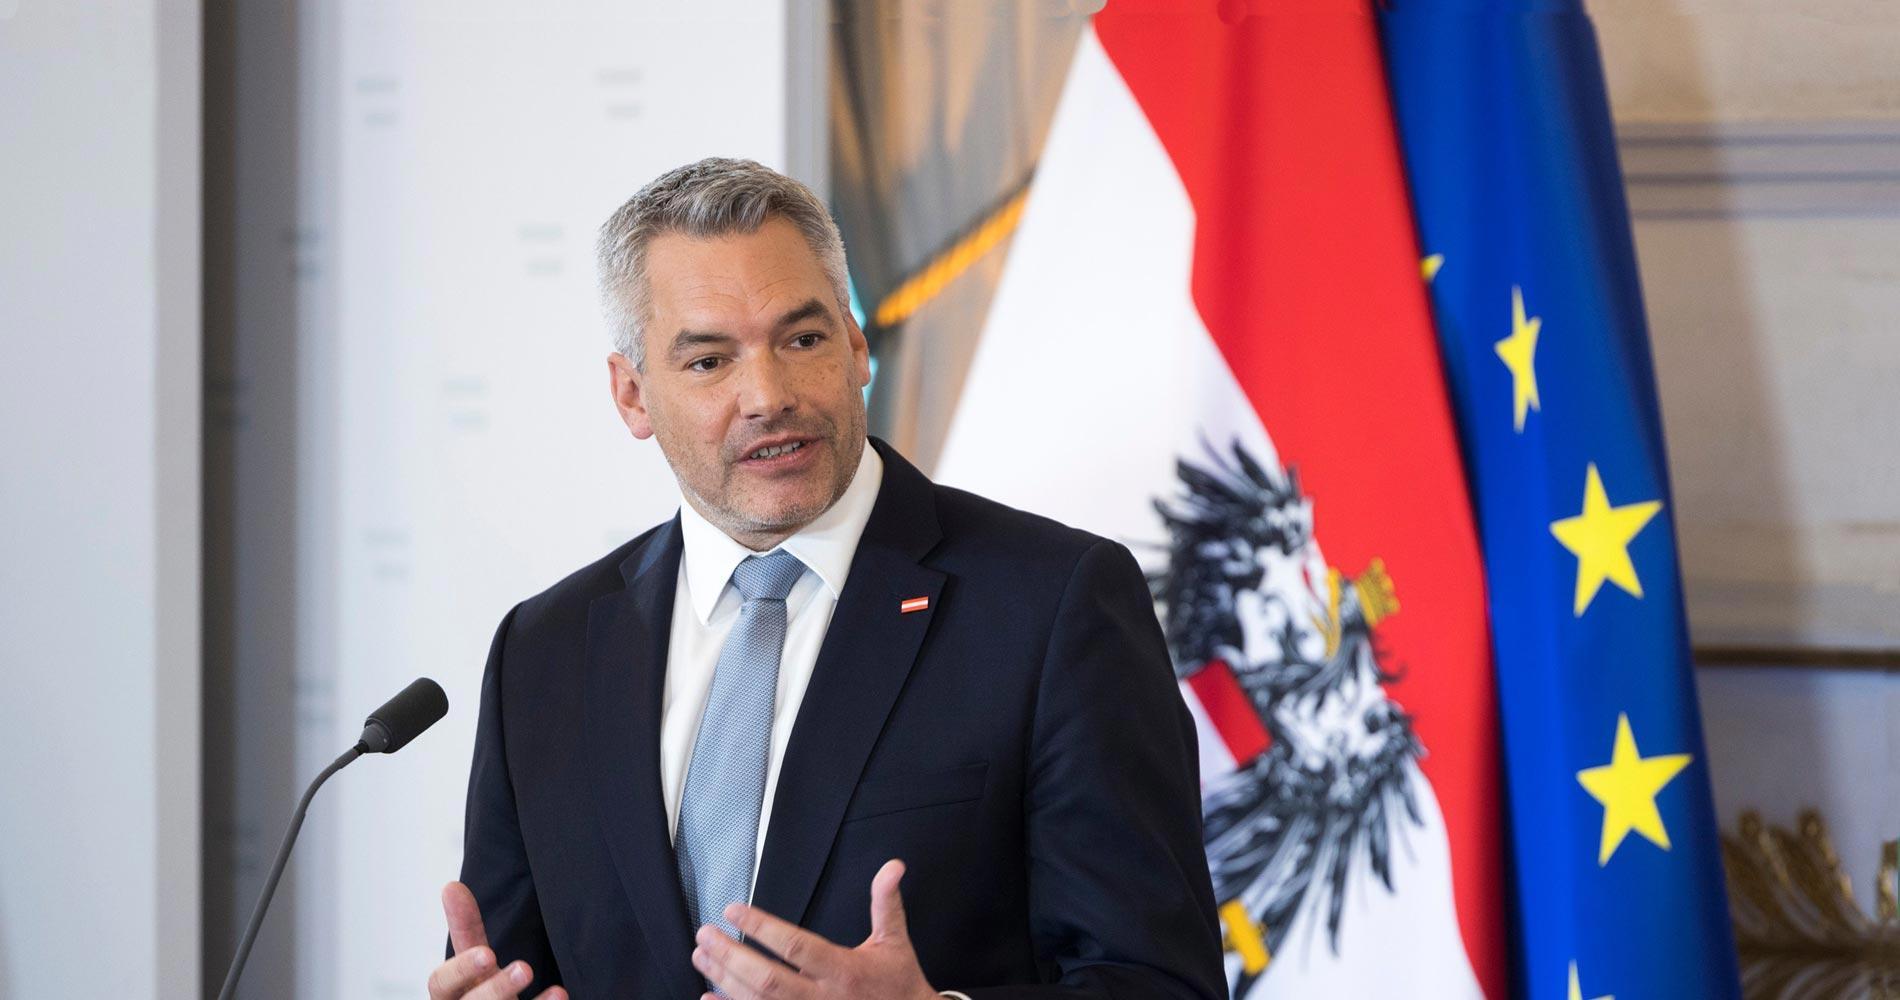 Austria: The Reality of Neutrality